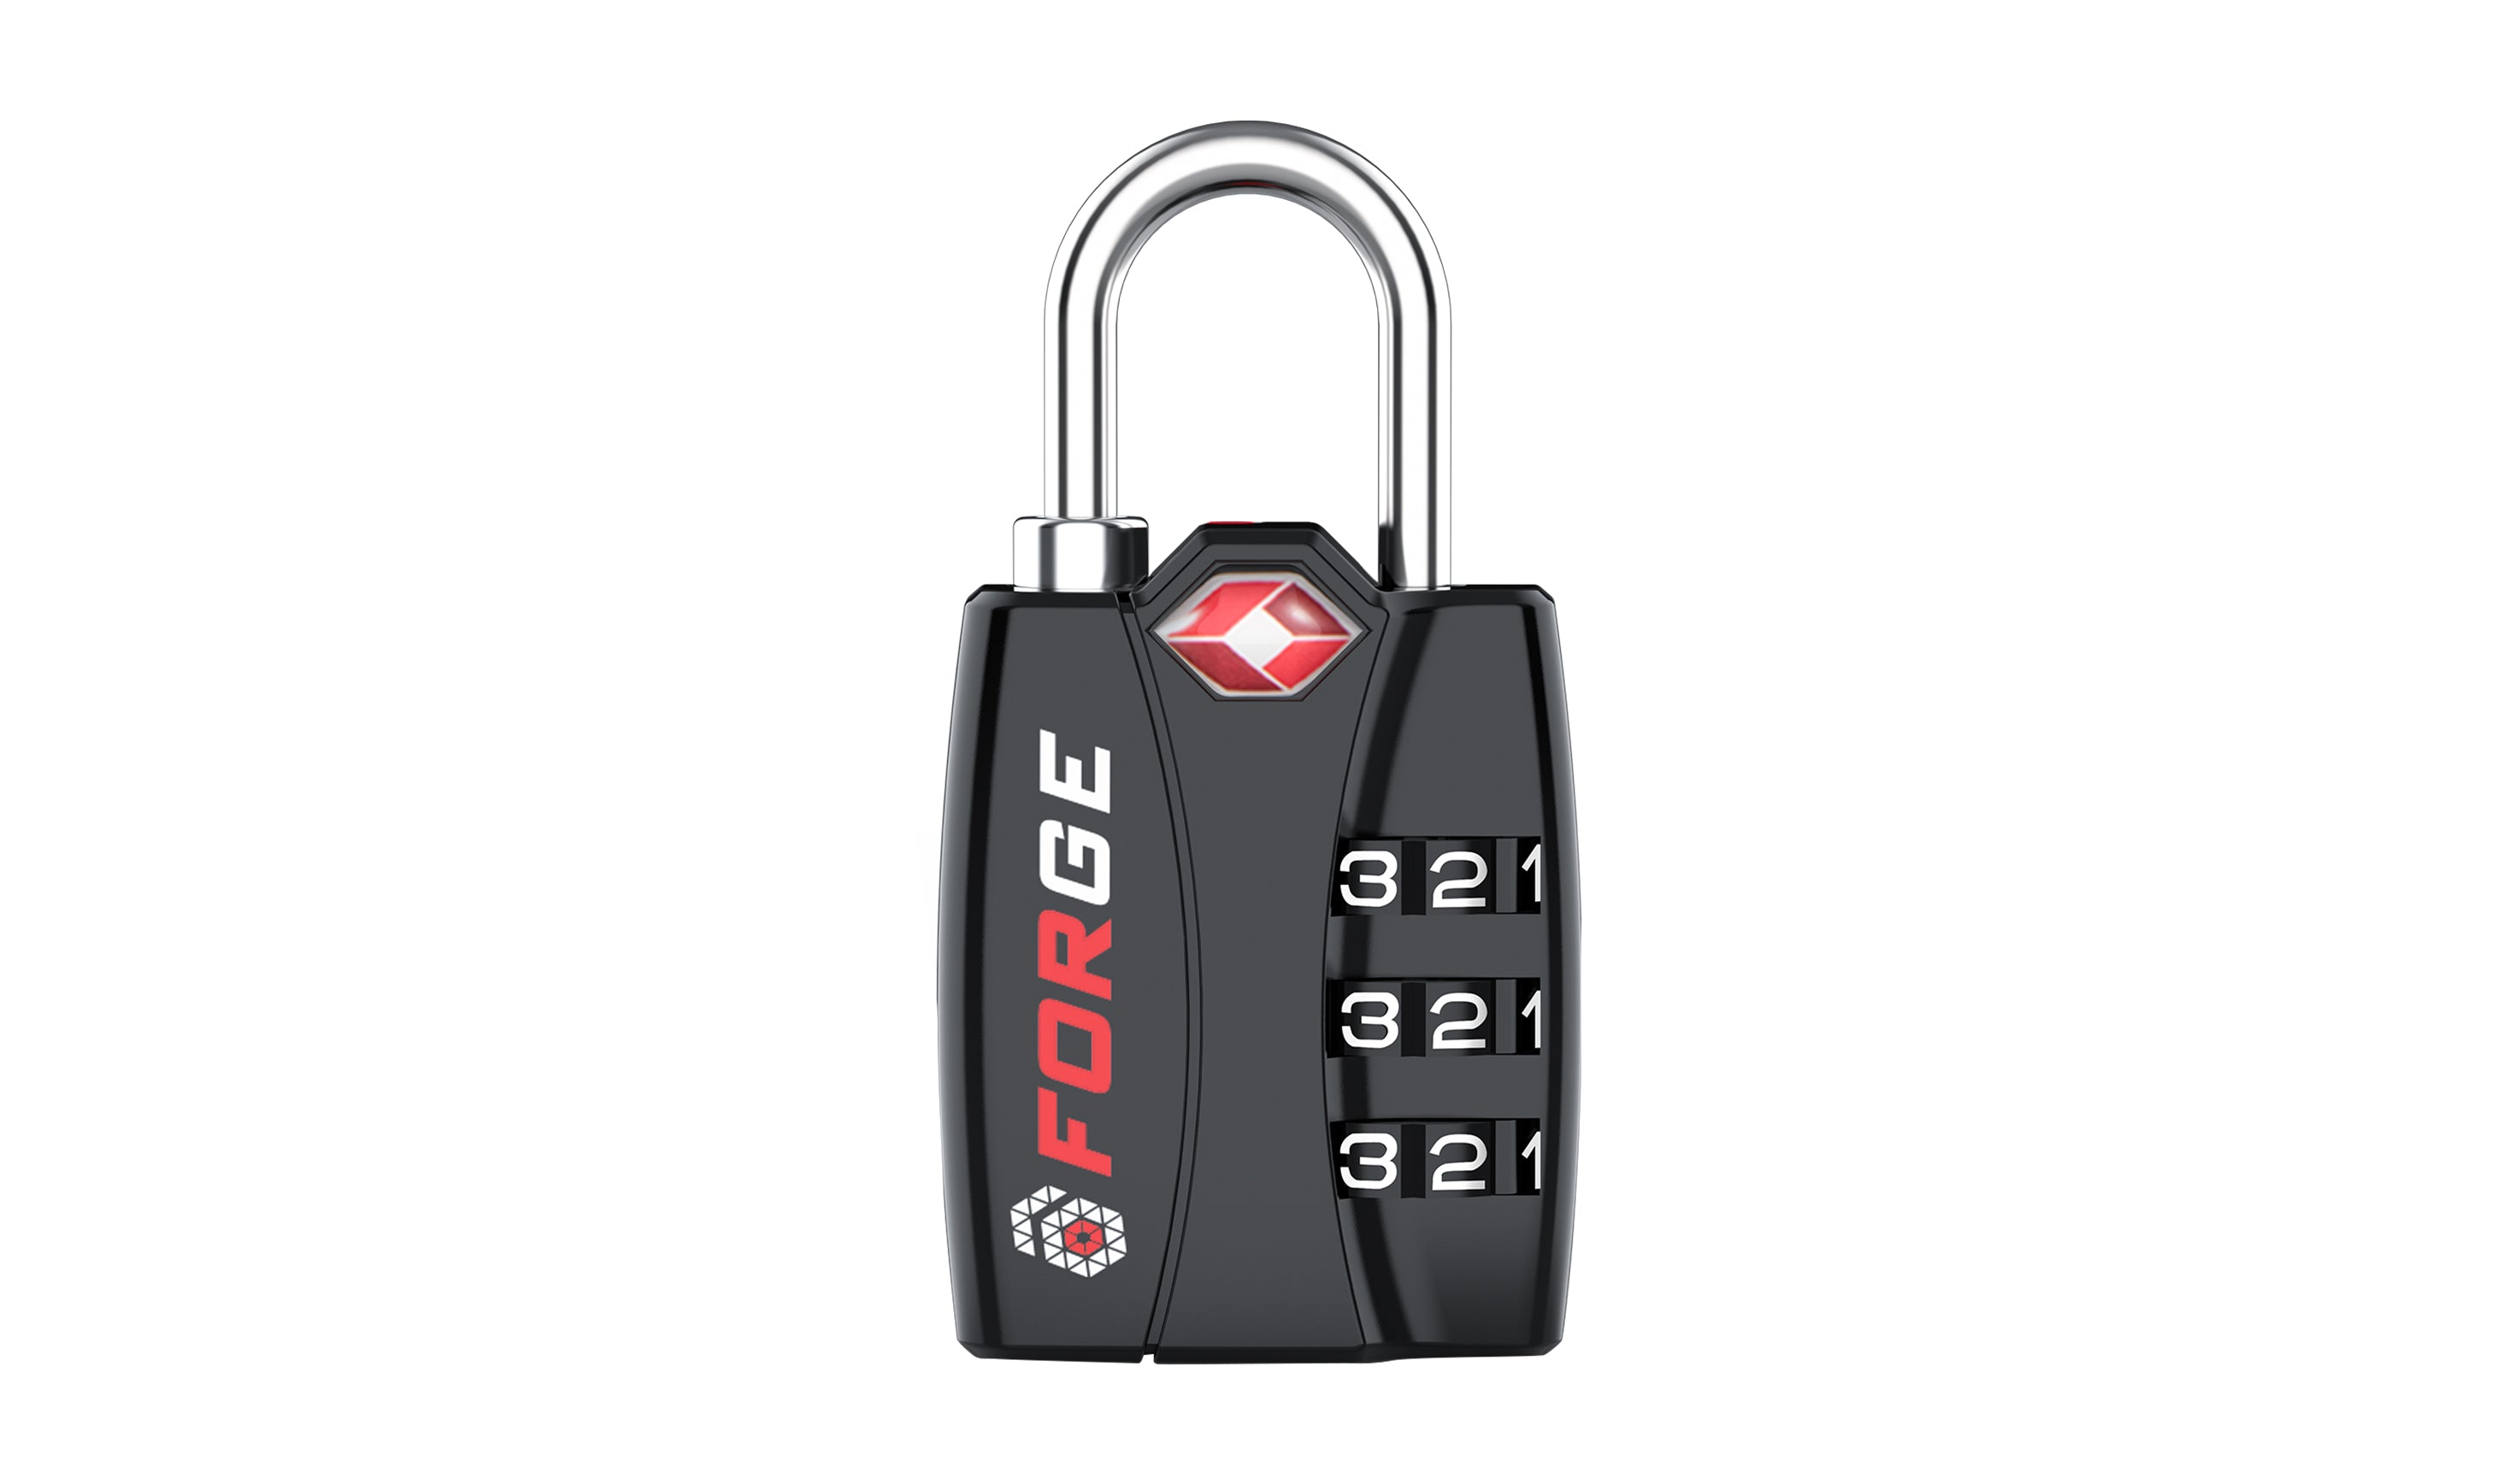 TSA-Approved Luggage Locks: 3-Digit Combination, Open Alert Indicator, Black 2 Locks